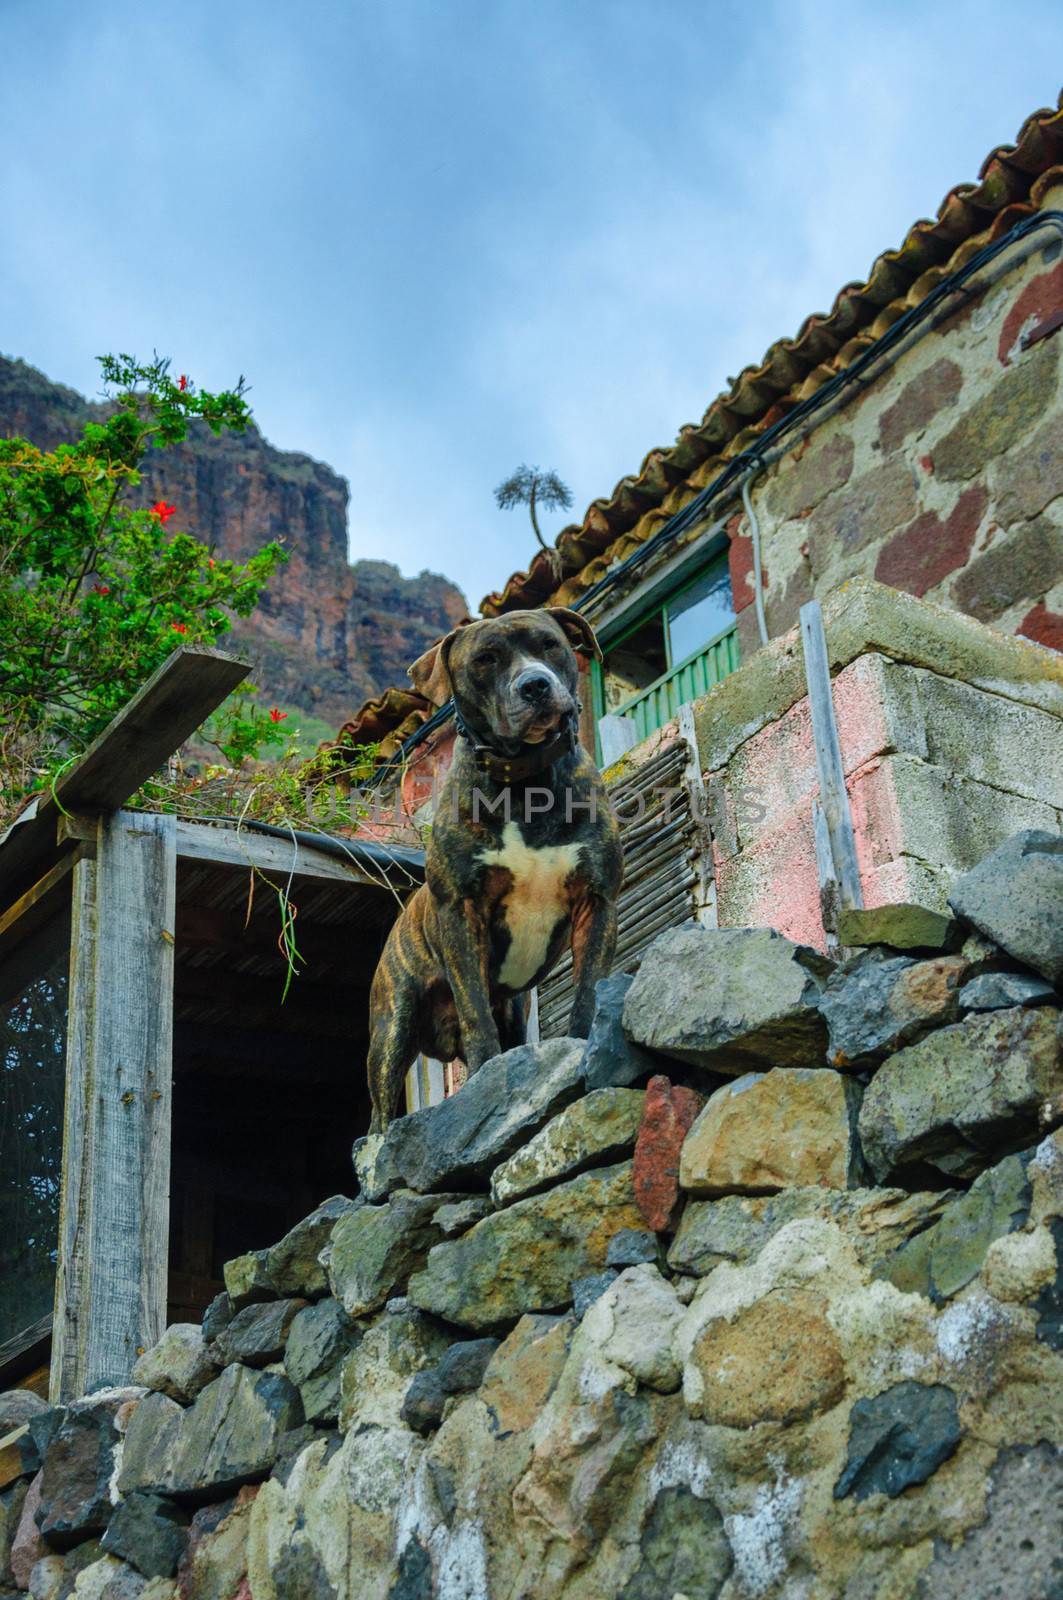 Dog on the street of Masca village, Tenerife, Canarian Islands